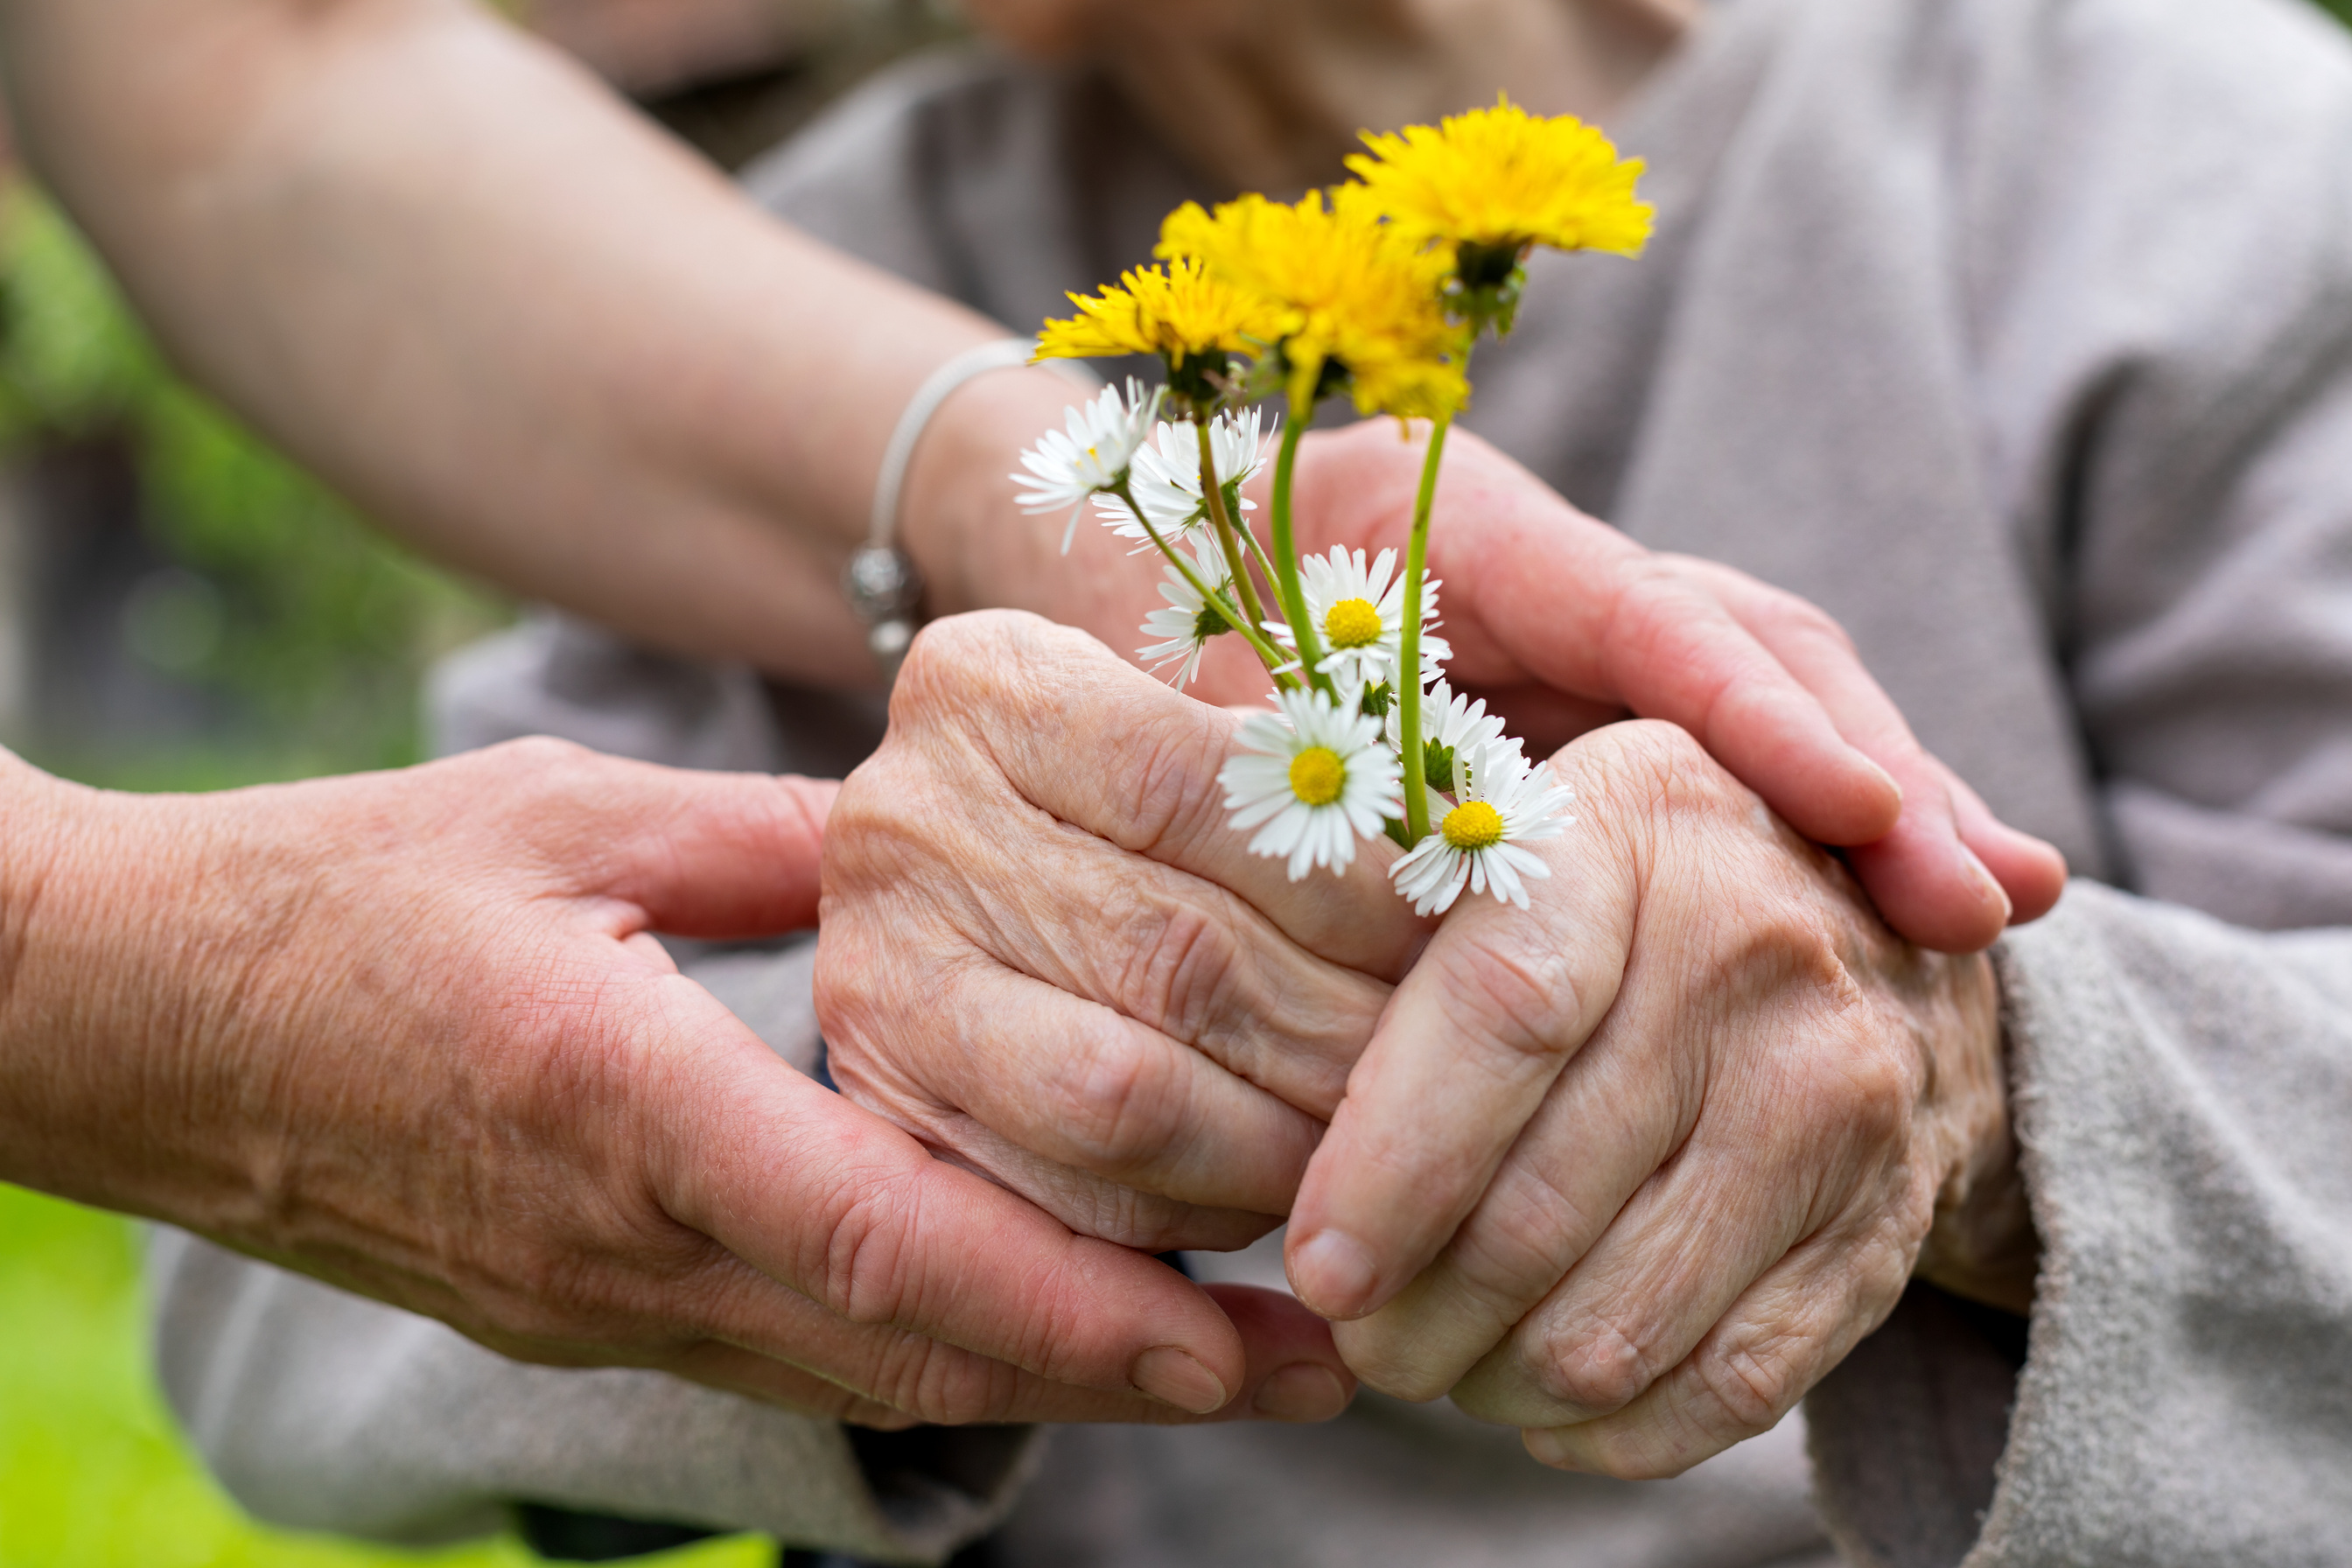 Elderly care - hands, bouquet